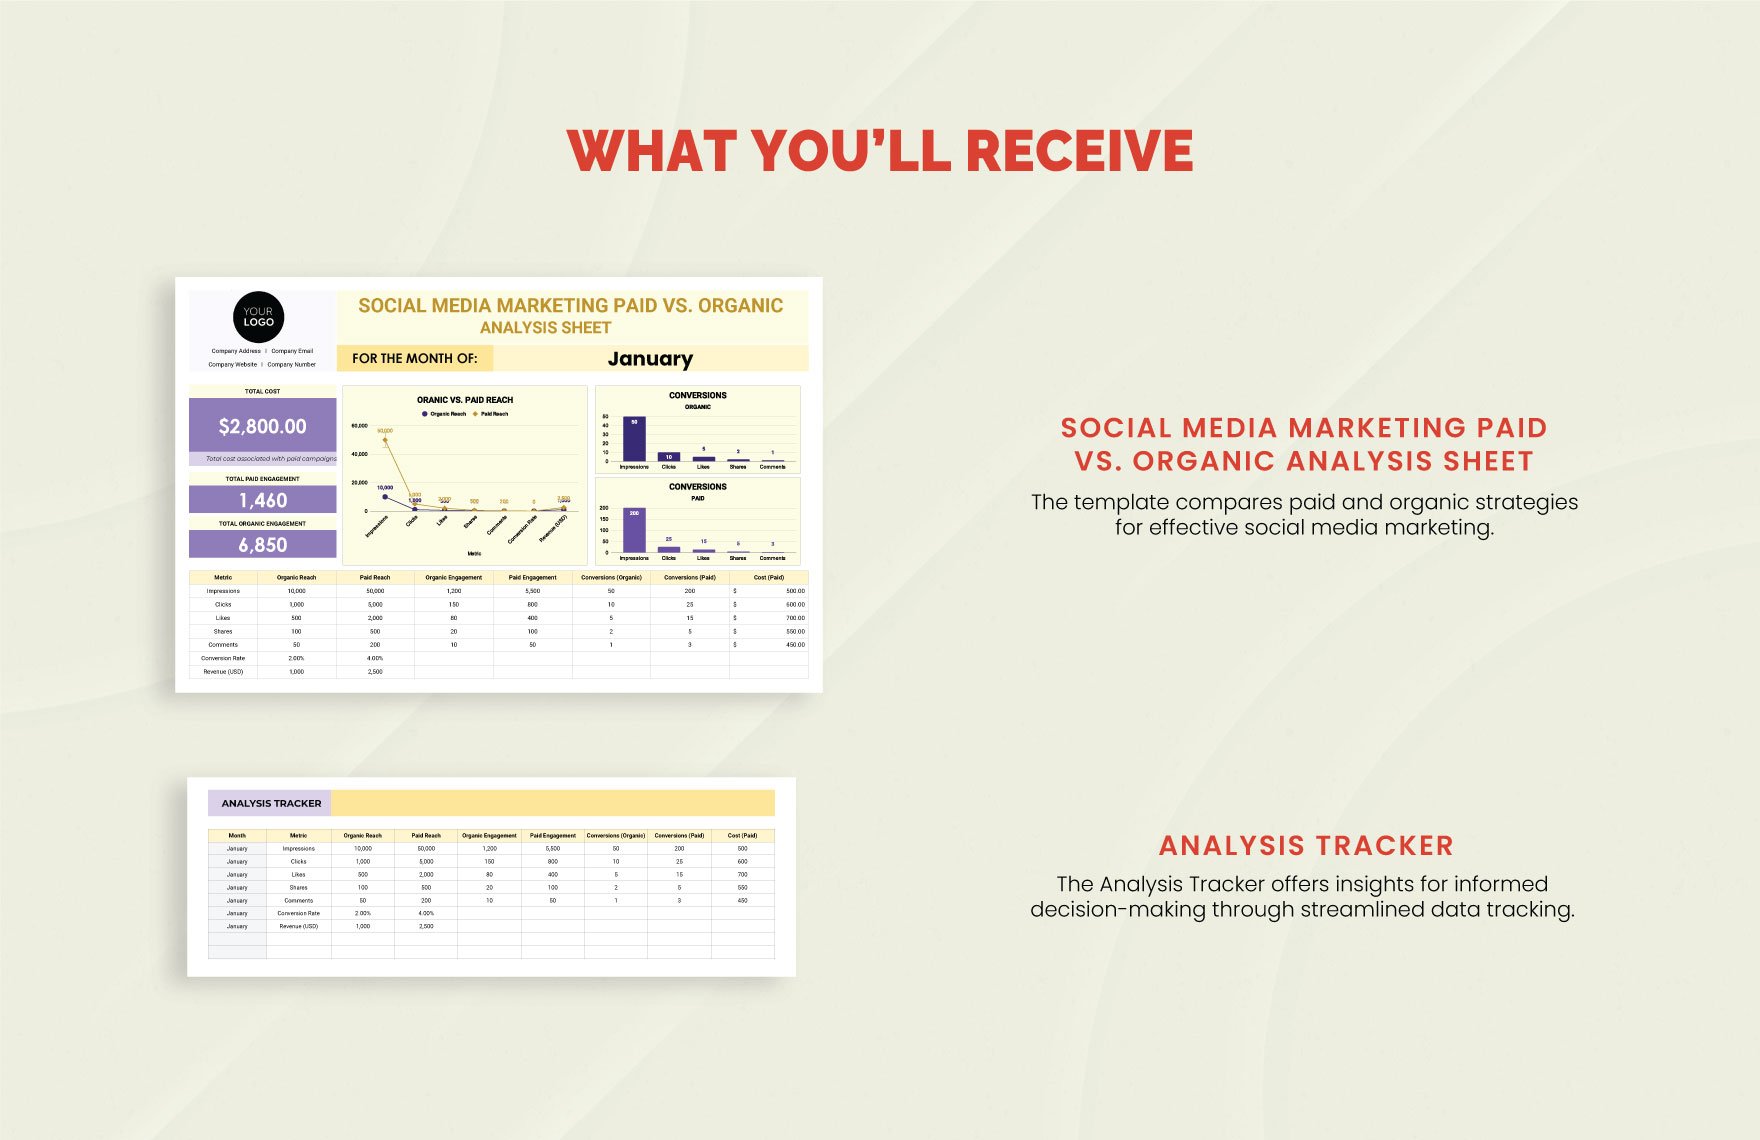 Social Media Marketing Paid vs. Organic Analysis Sheet Template